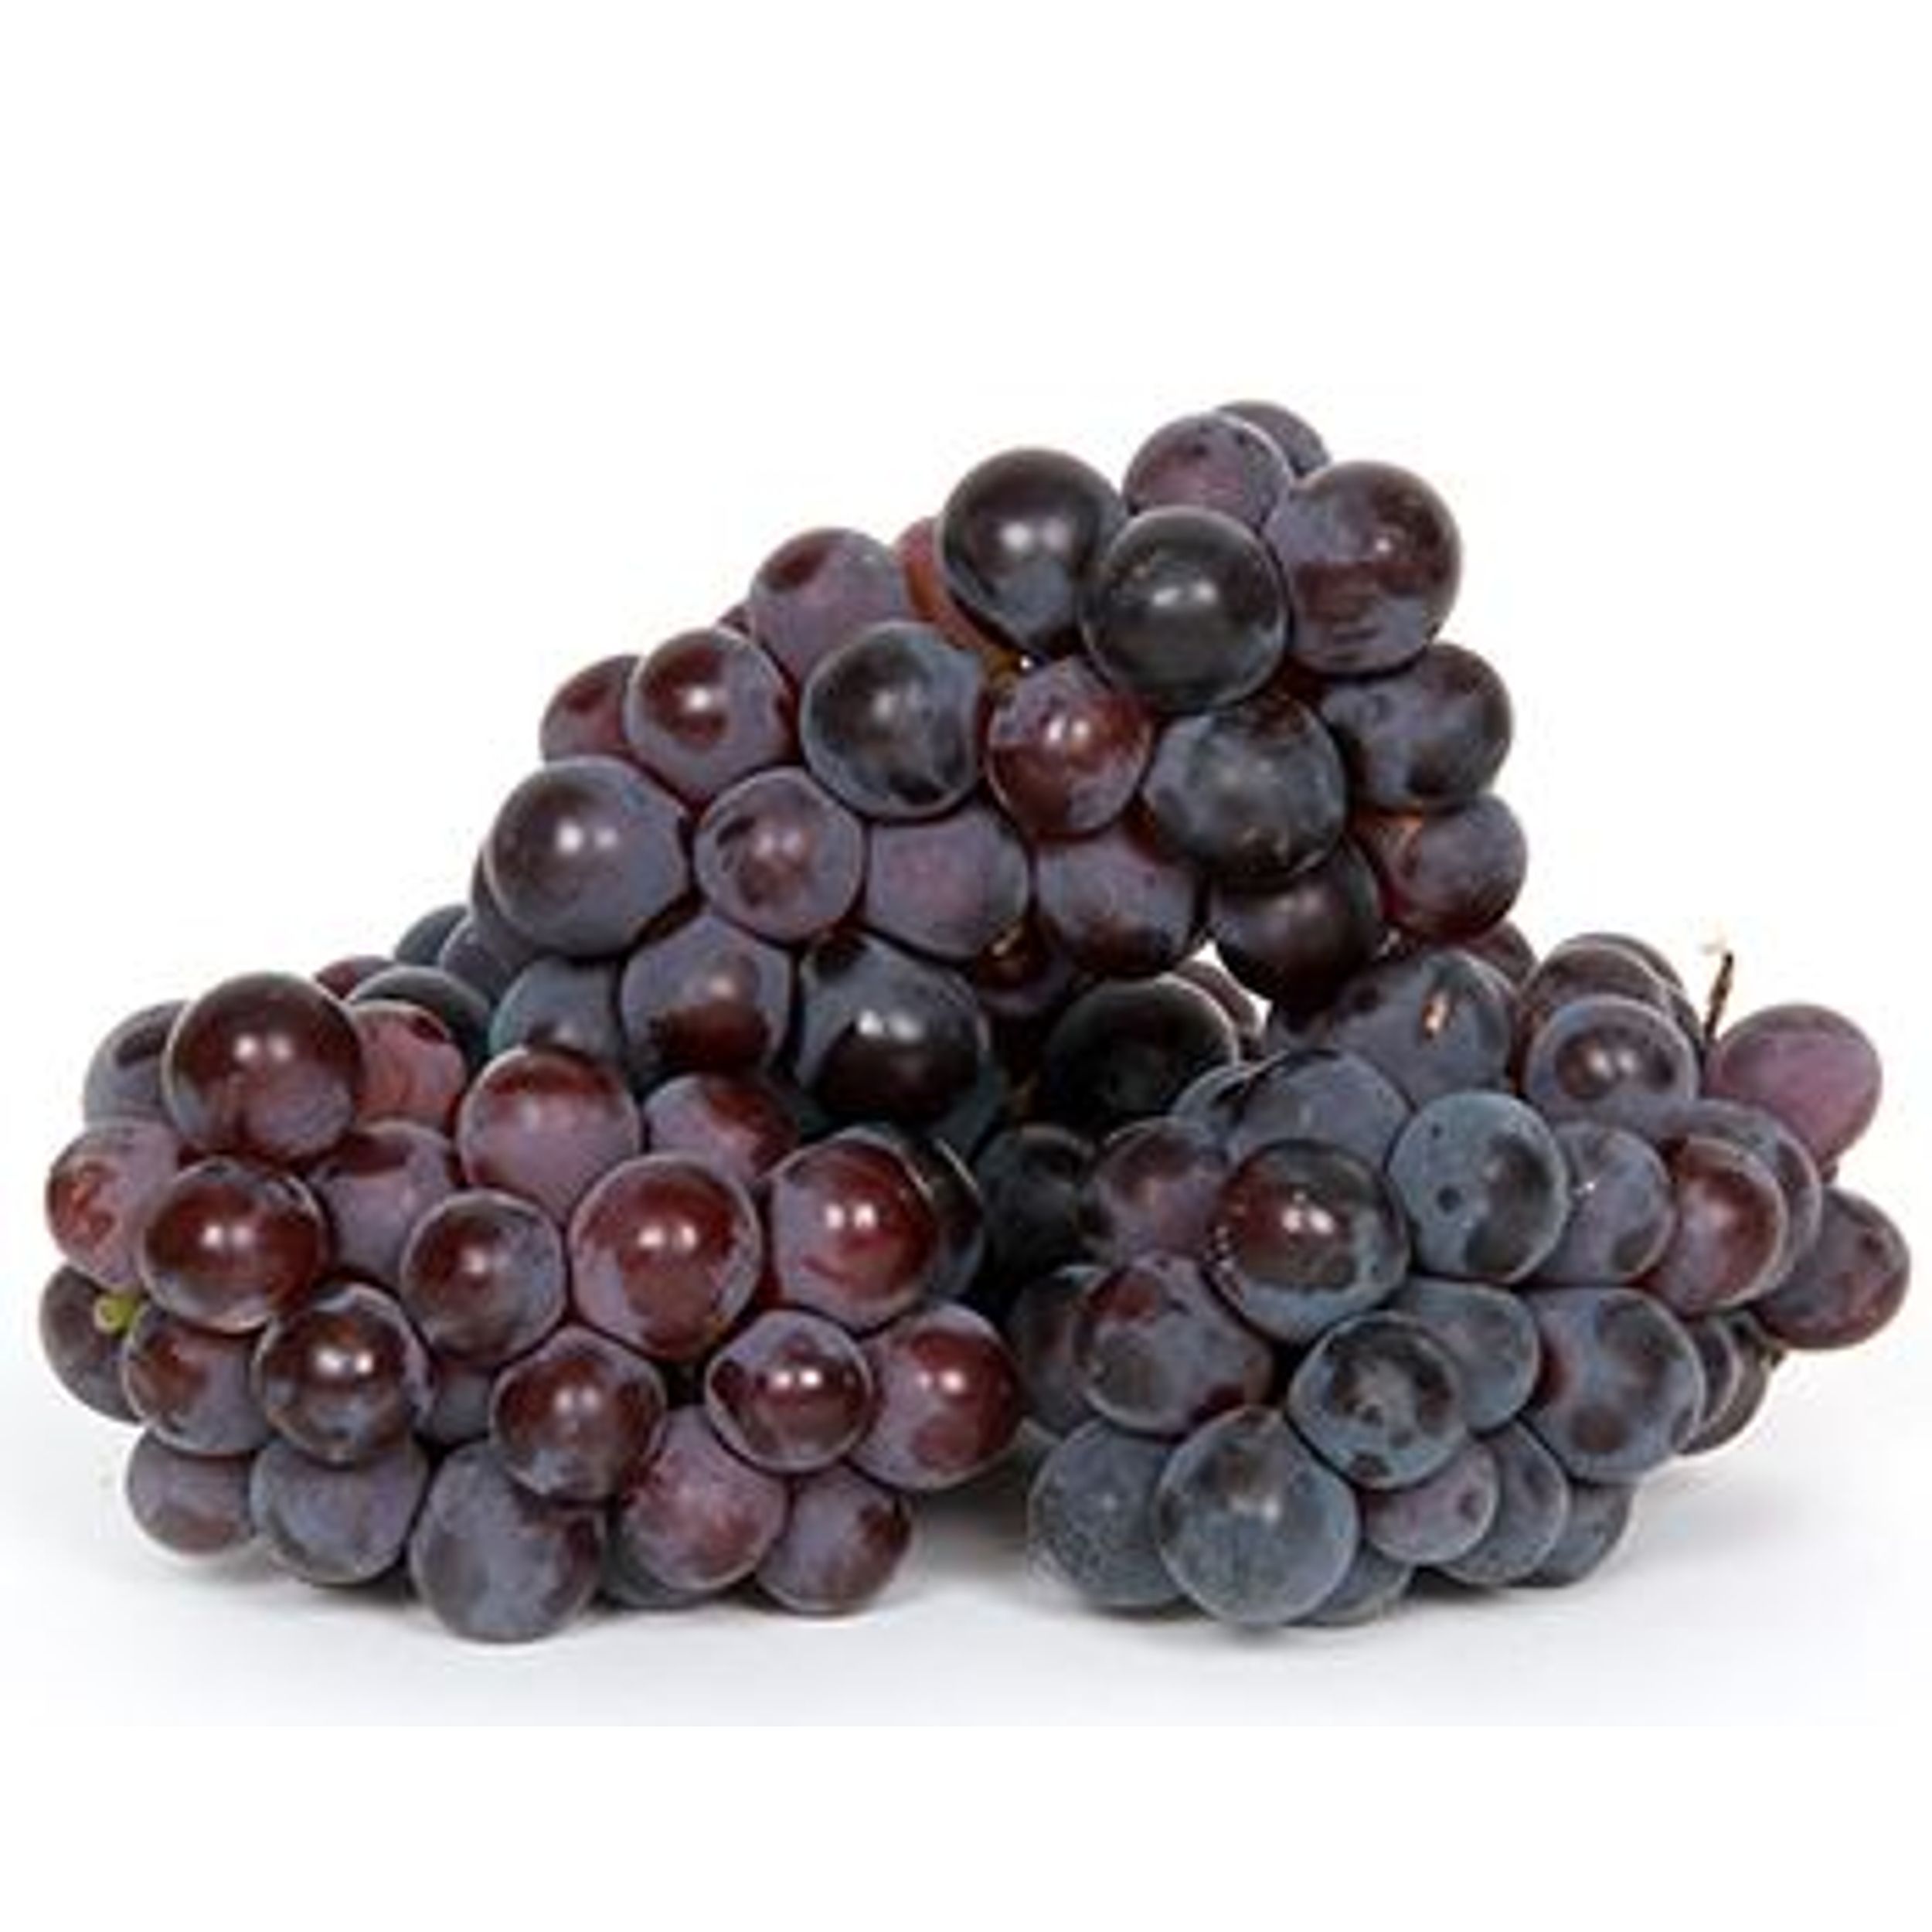 Black  Grapes / Panner Grapes